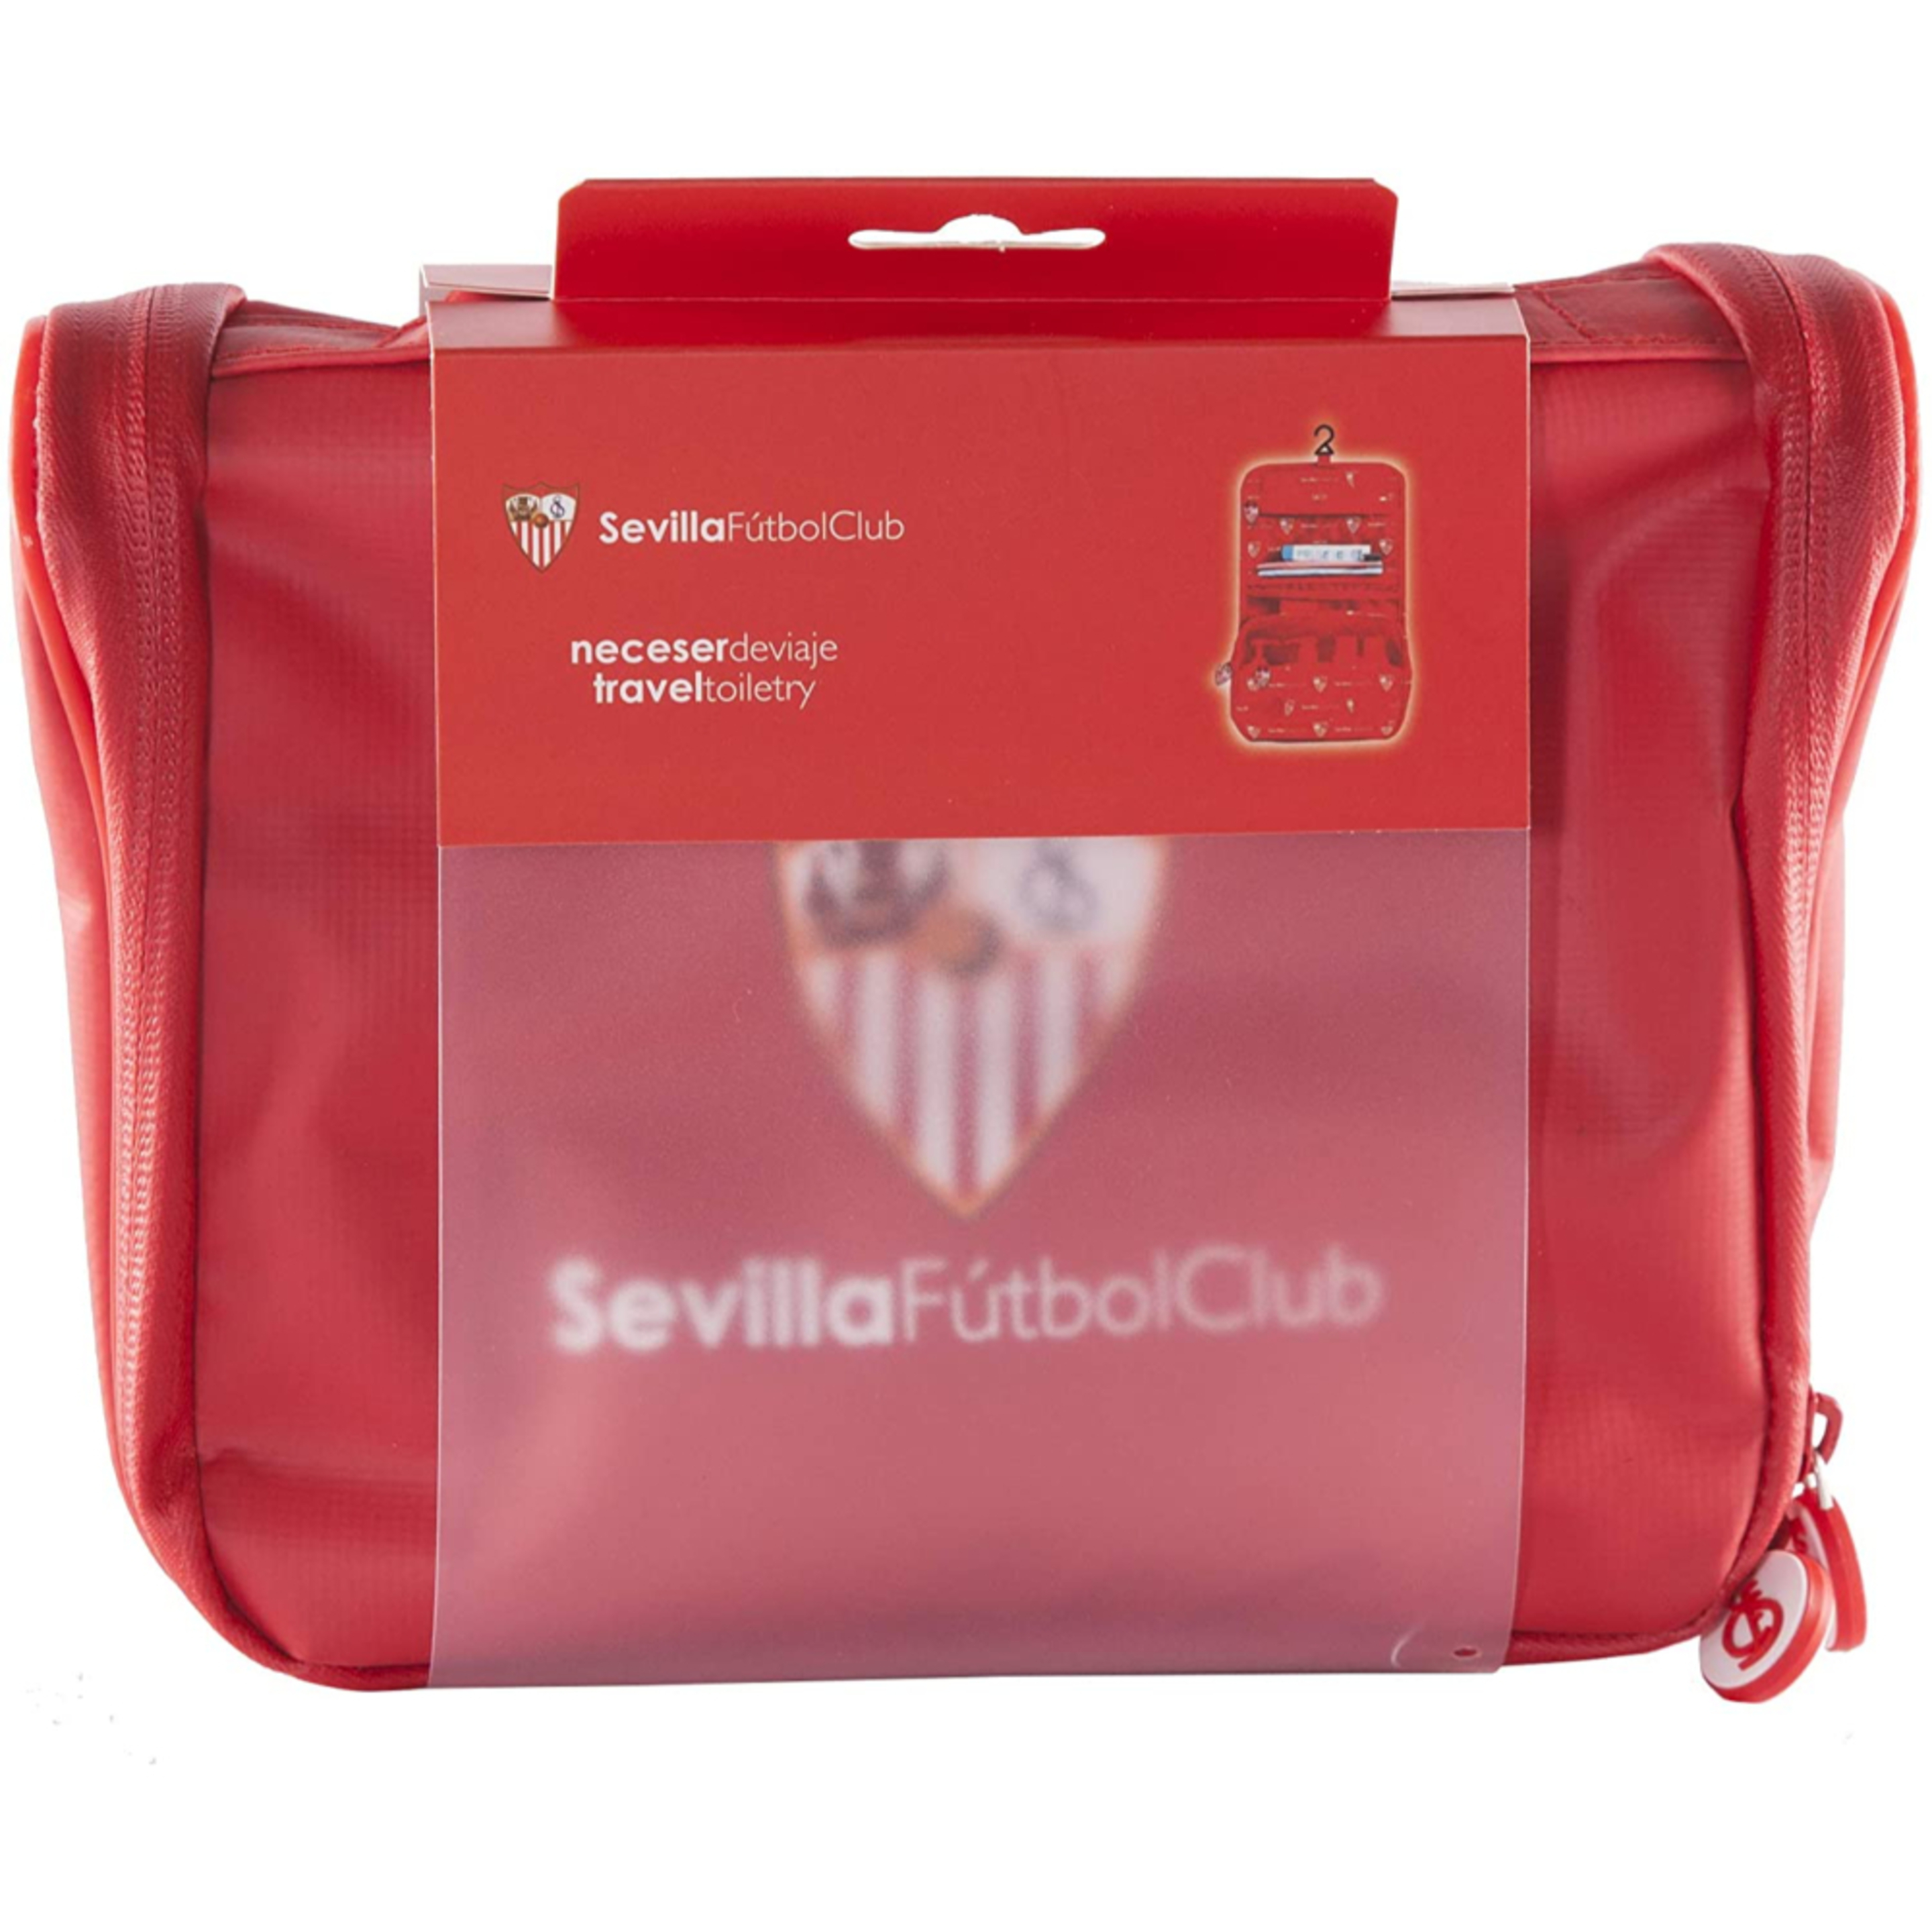 Eu Preciso Do Clube De Futebol De Sevilla